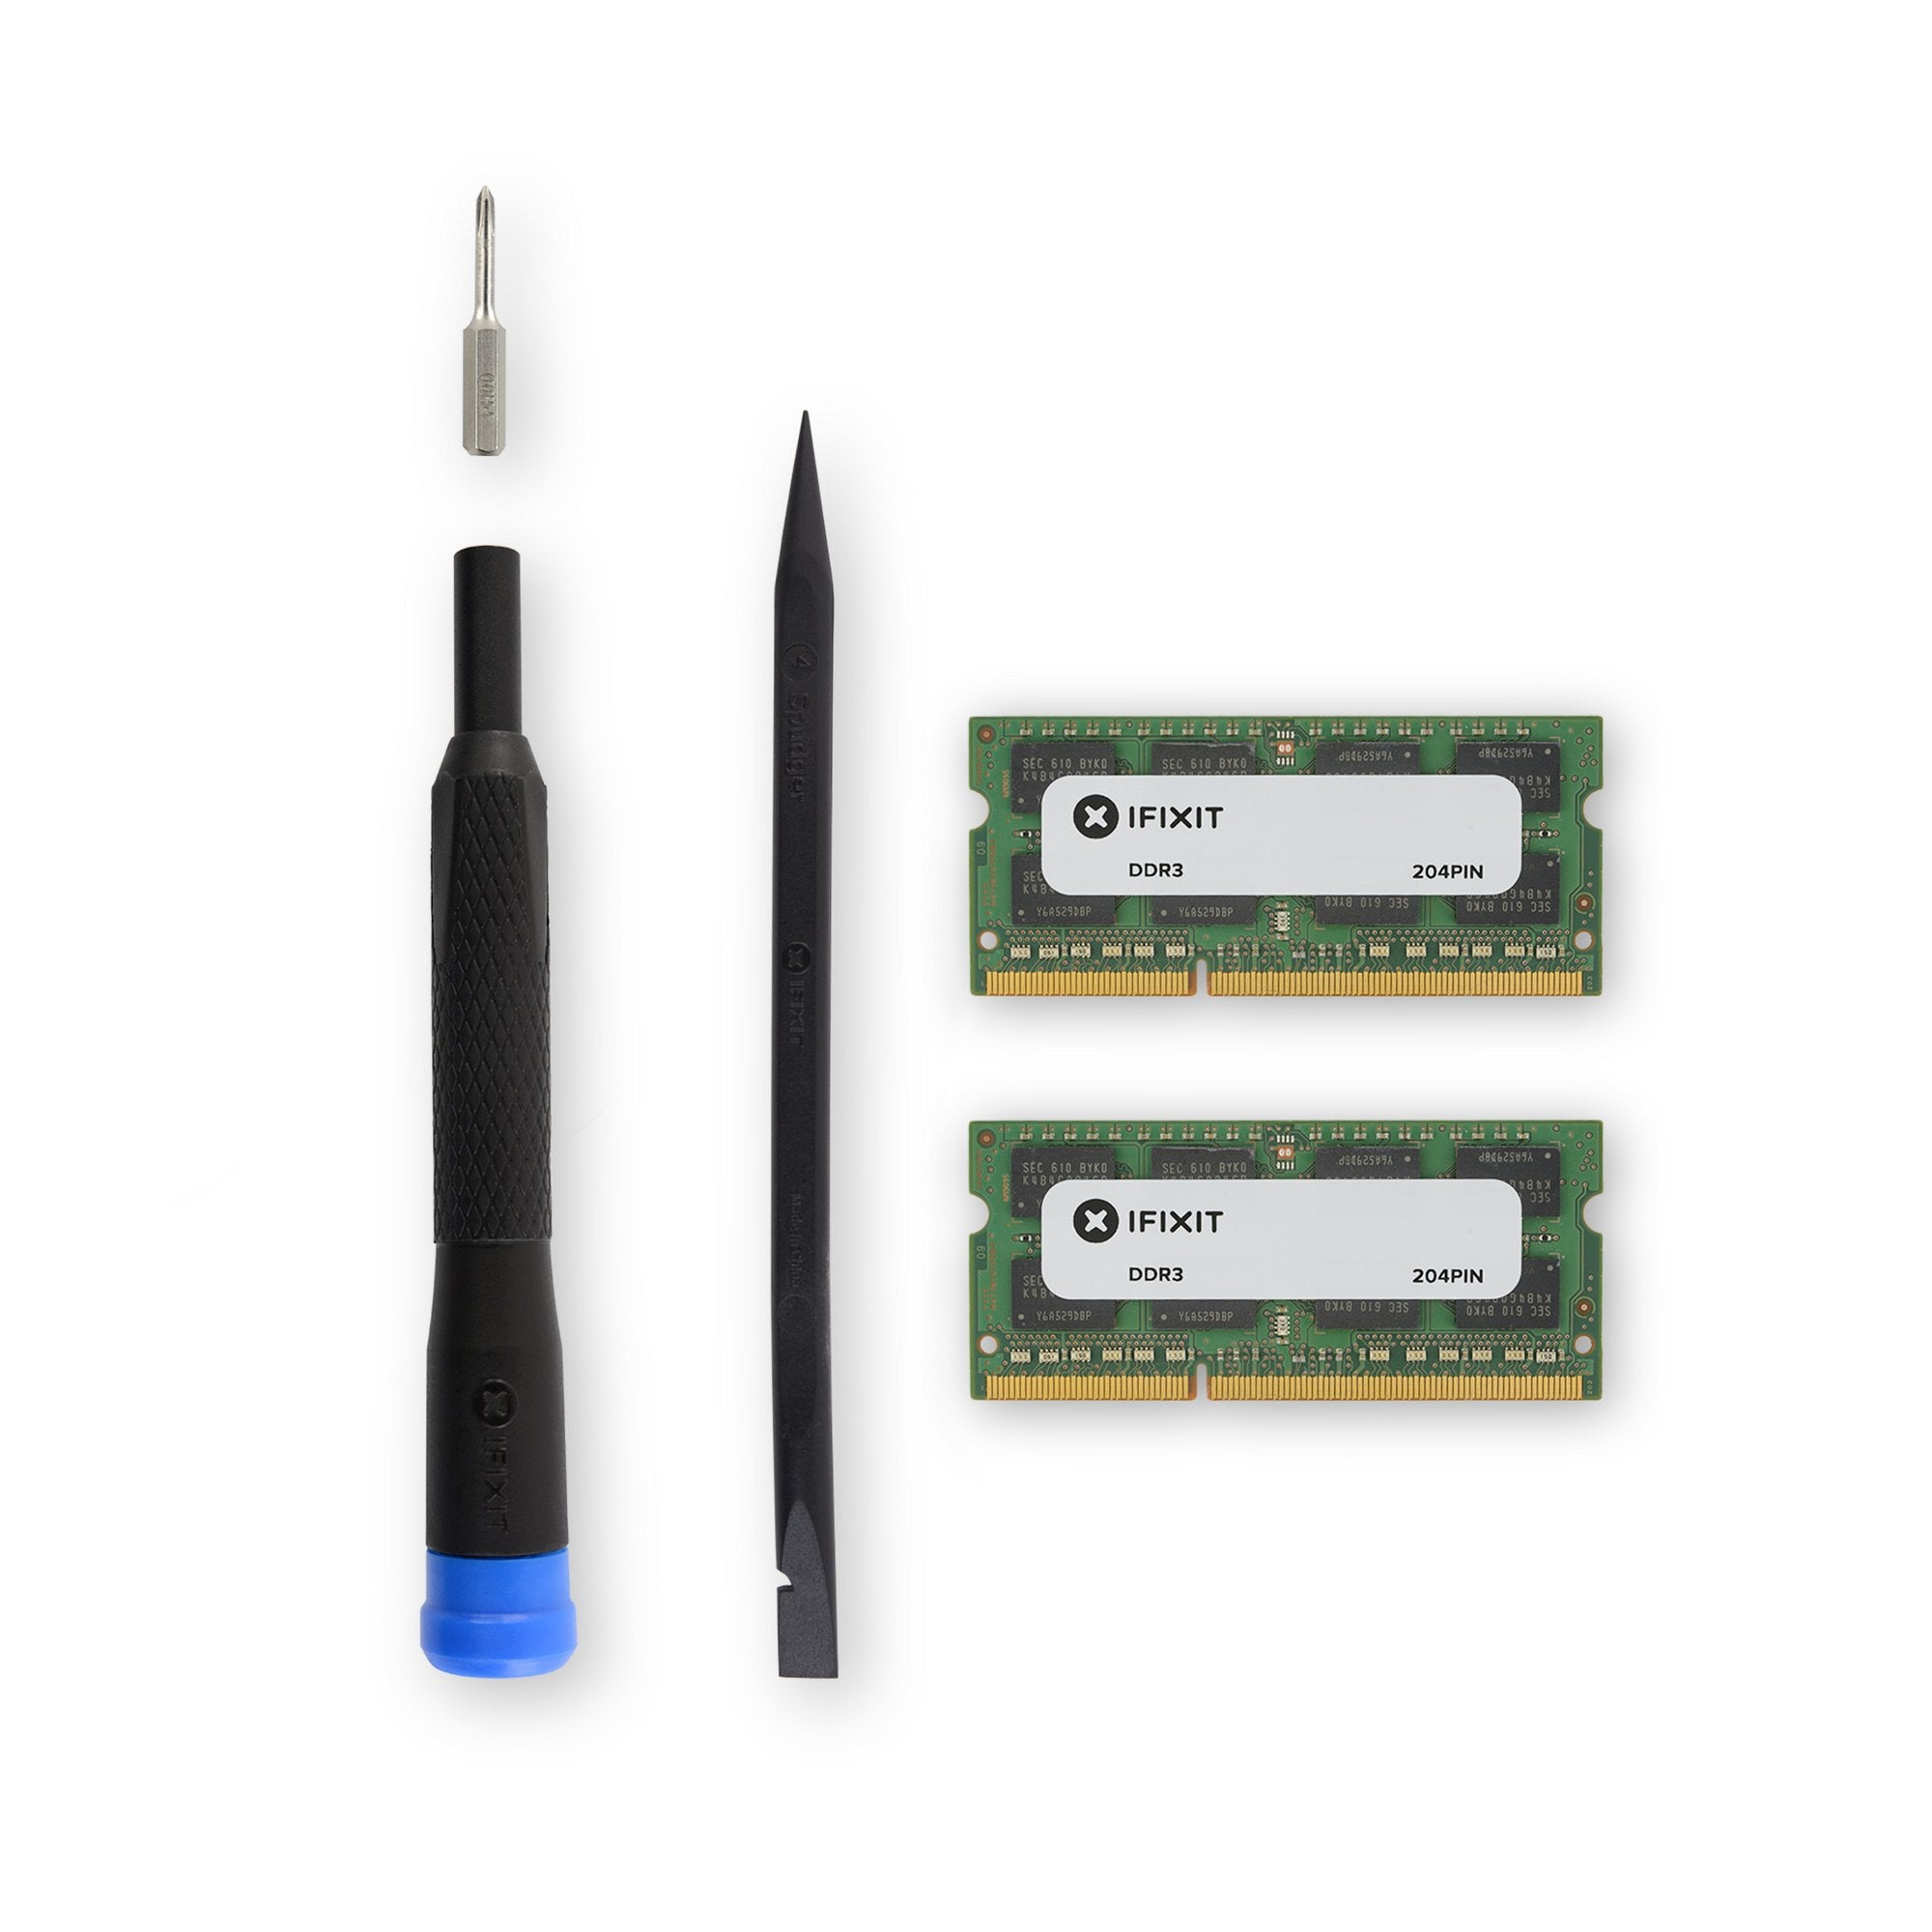 MacBook 13" Unibody (A1342 Late 2009) Memory Maxxer RAM Upgrade Kit